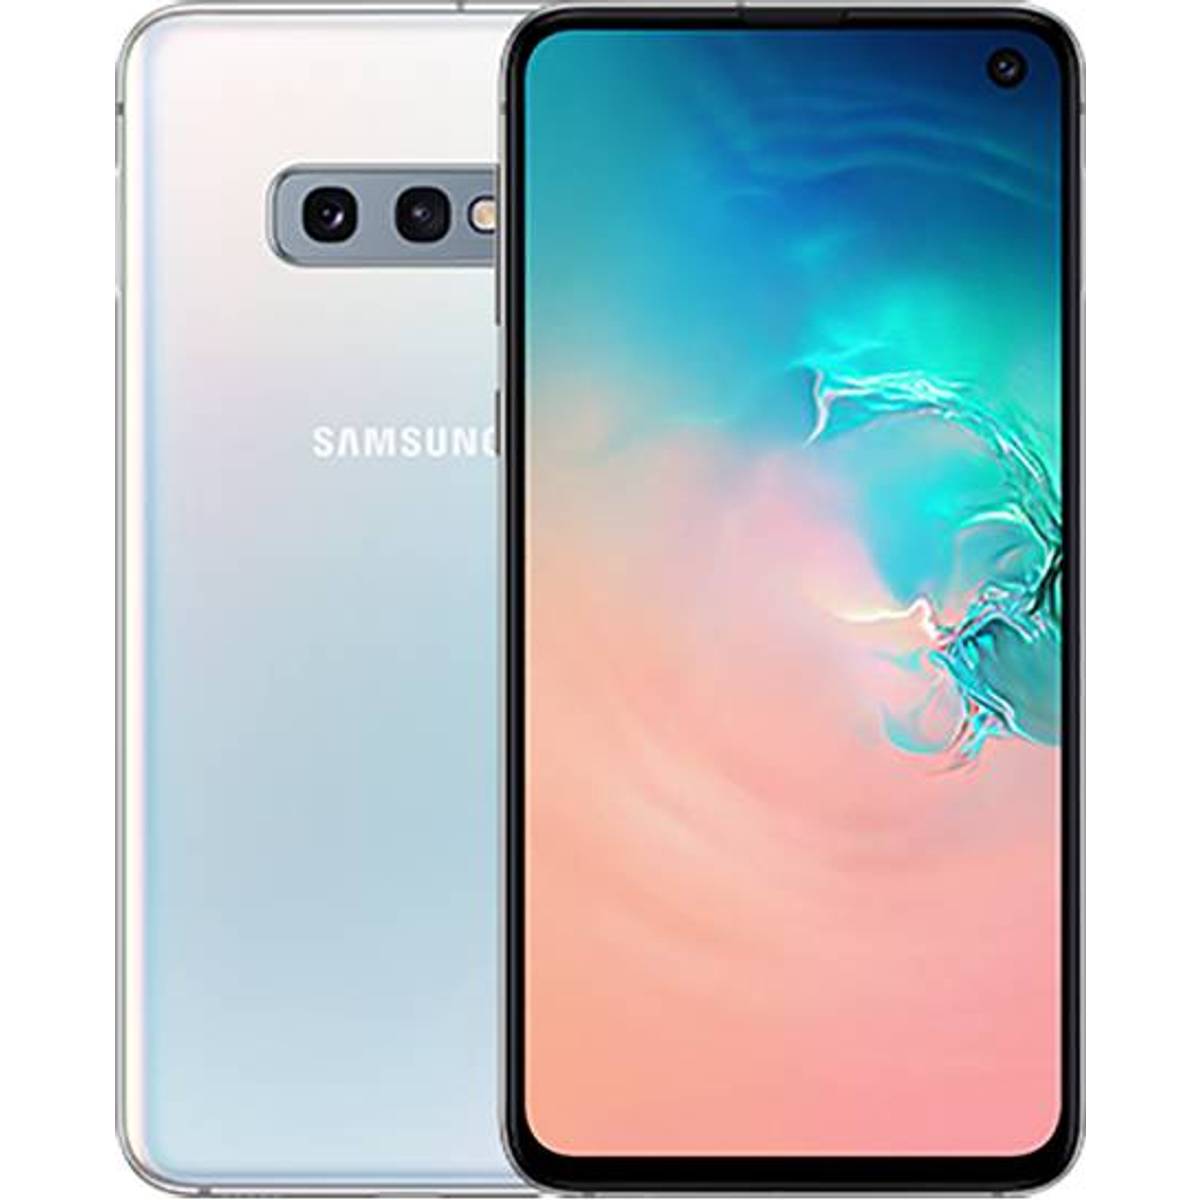 Samsung all phone price